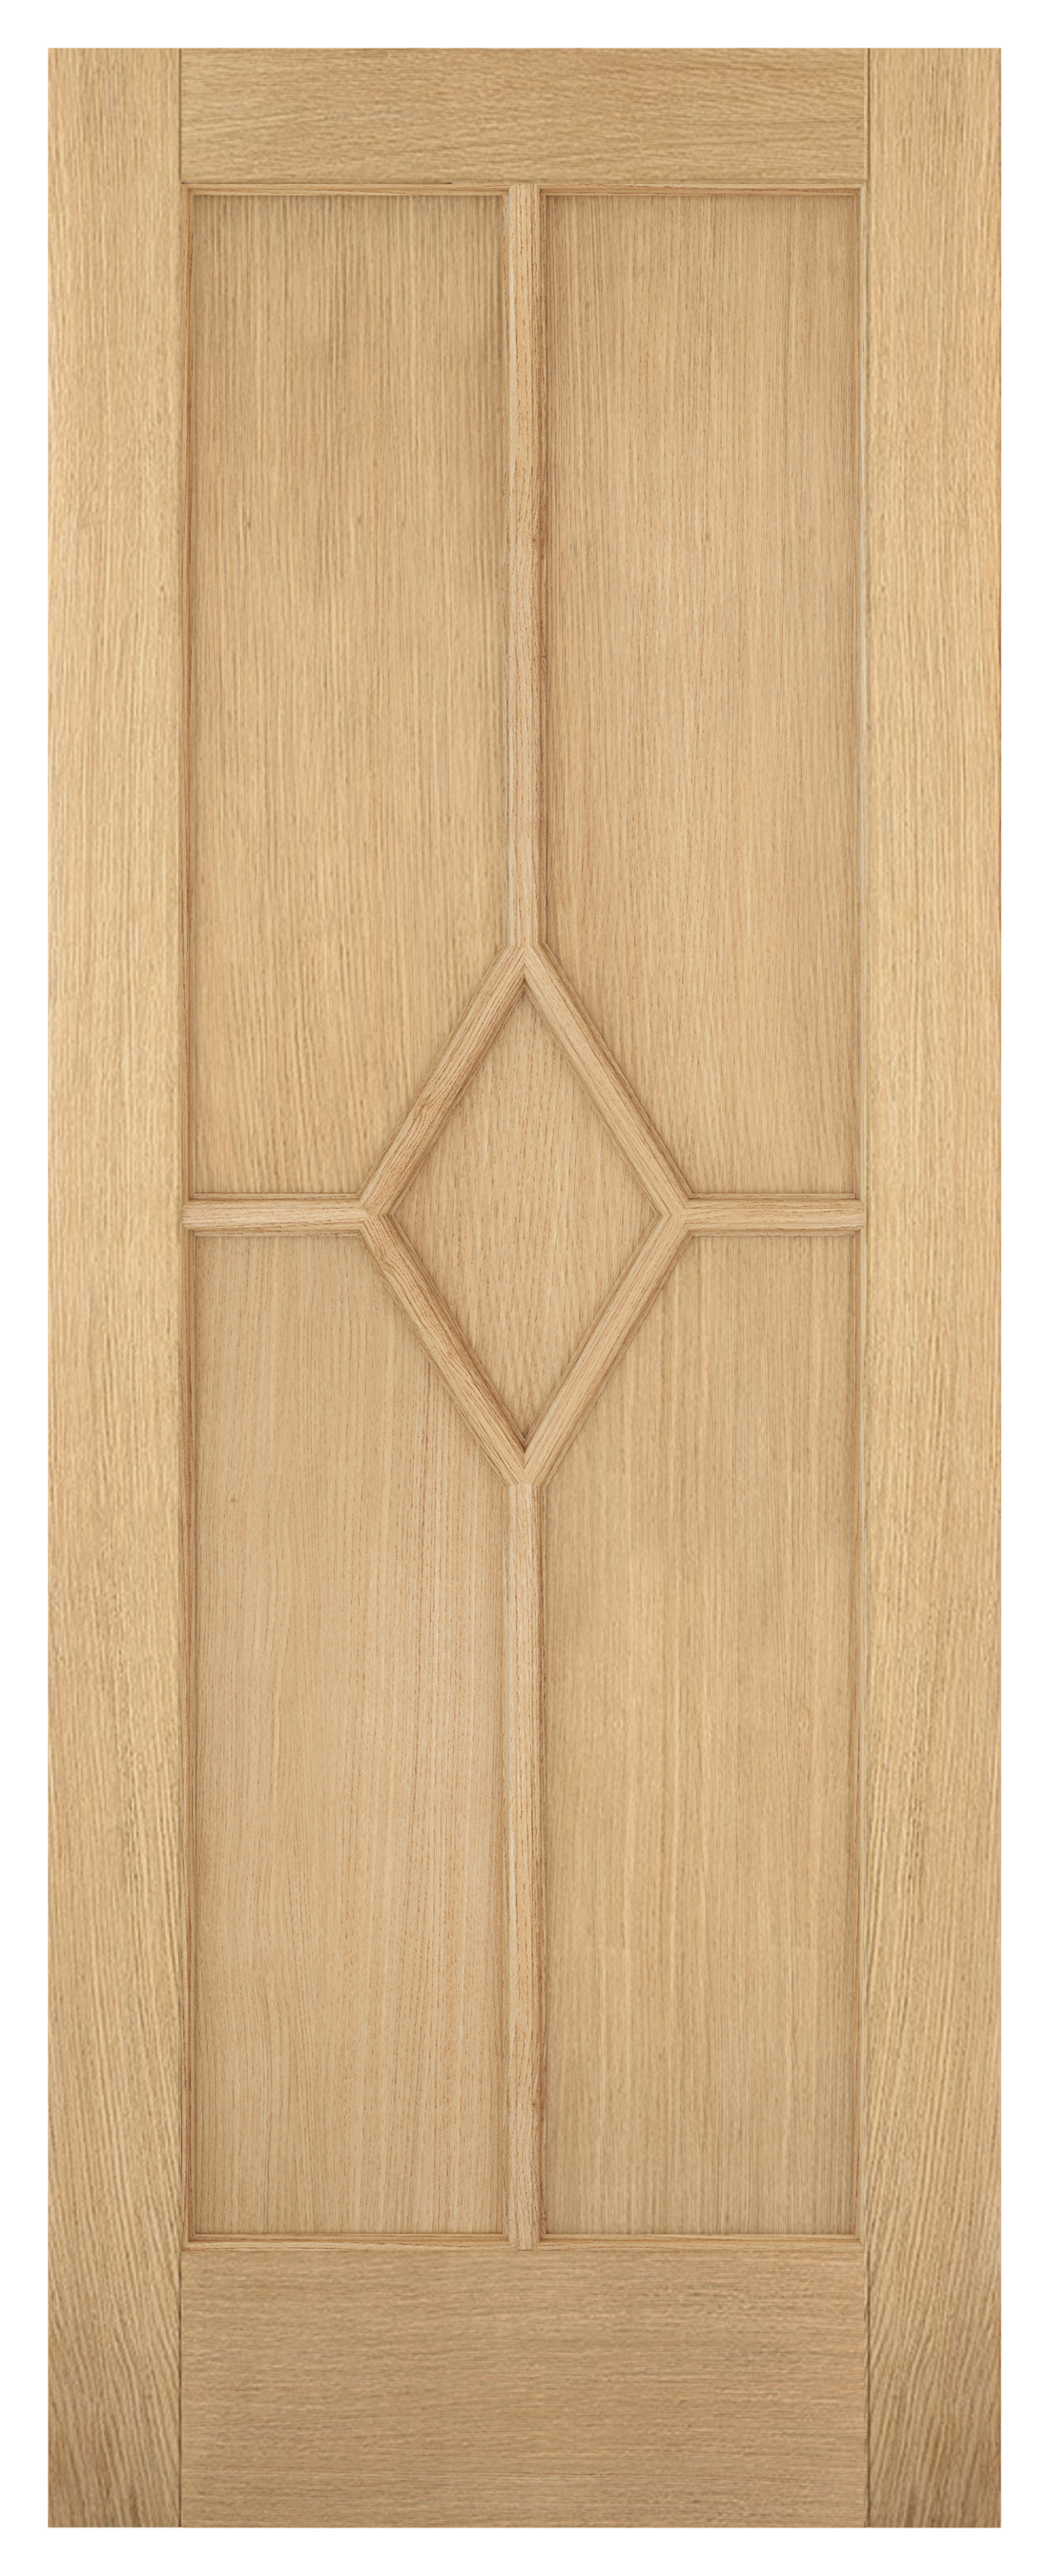 Image of LPD Internal Reims 5 Panel Pre-finished Oak FD30 Fire Door - 838 x 1981mm